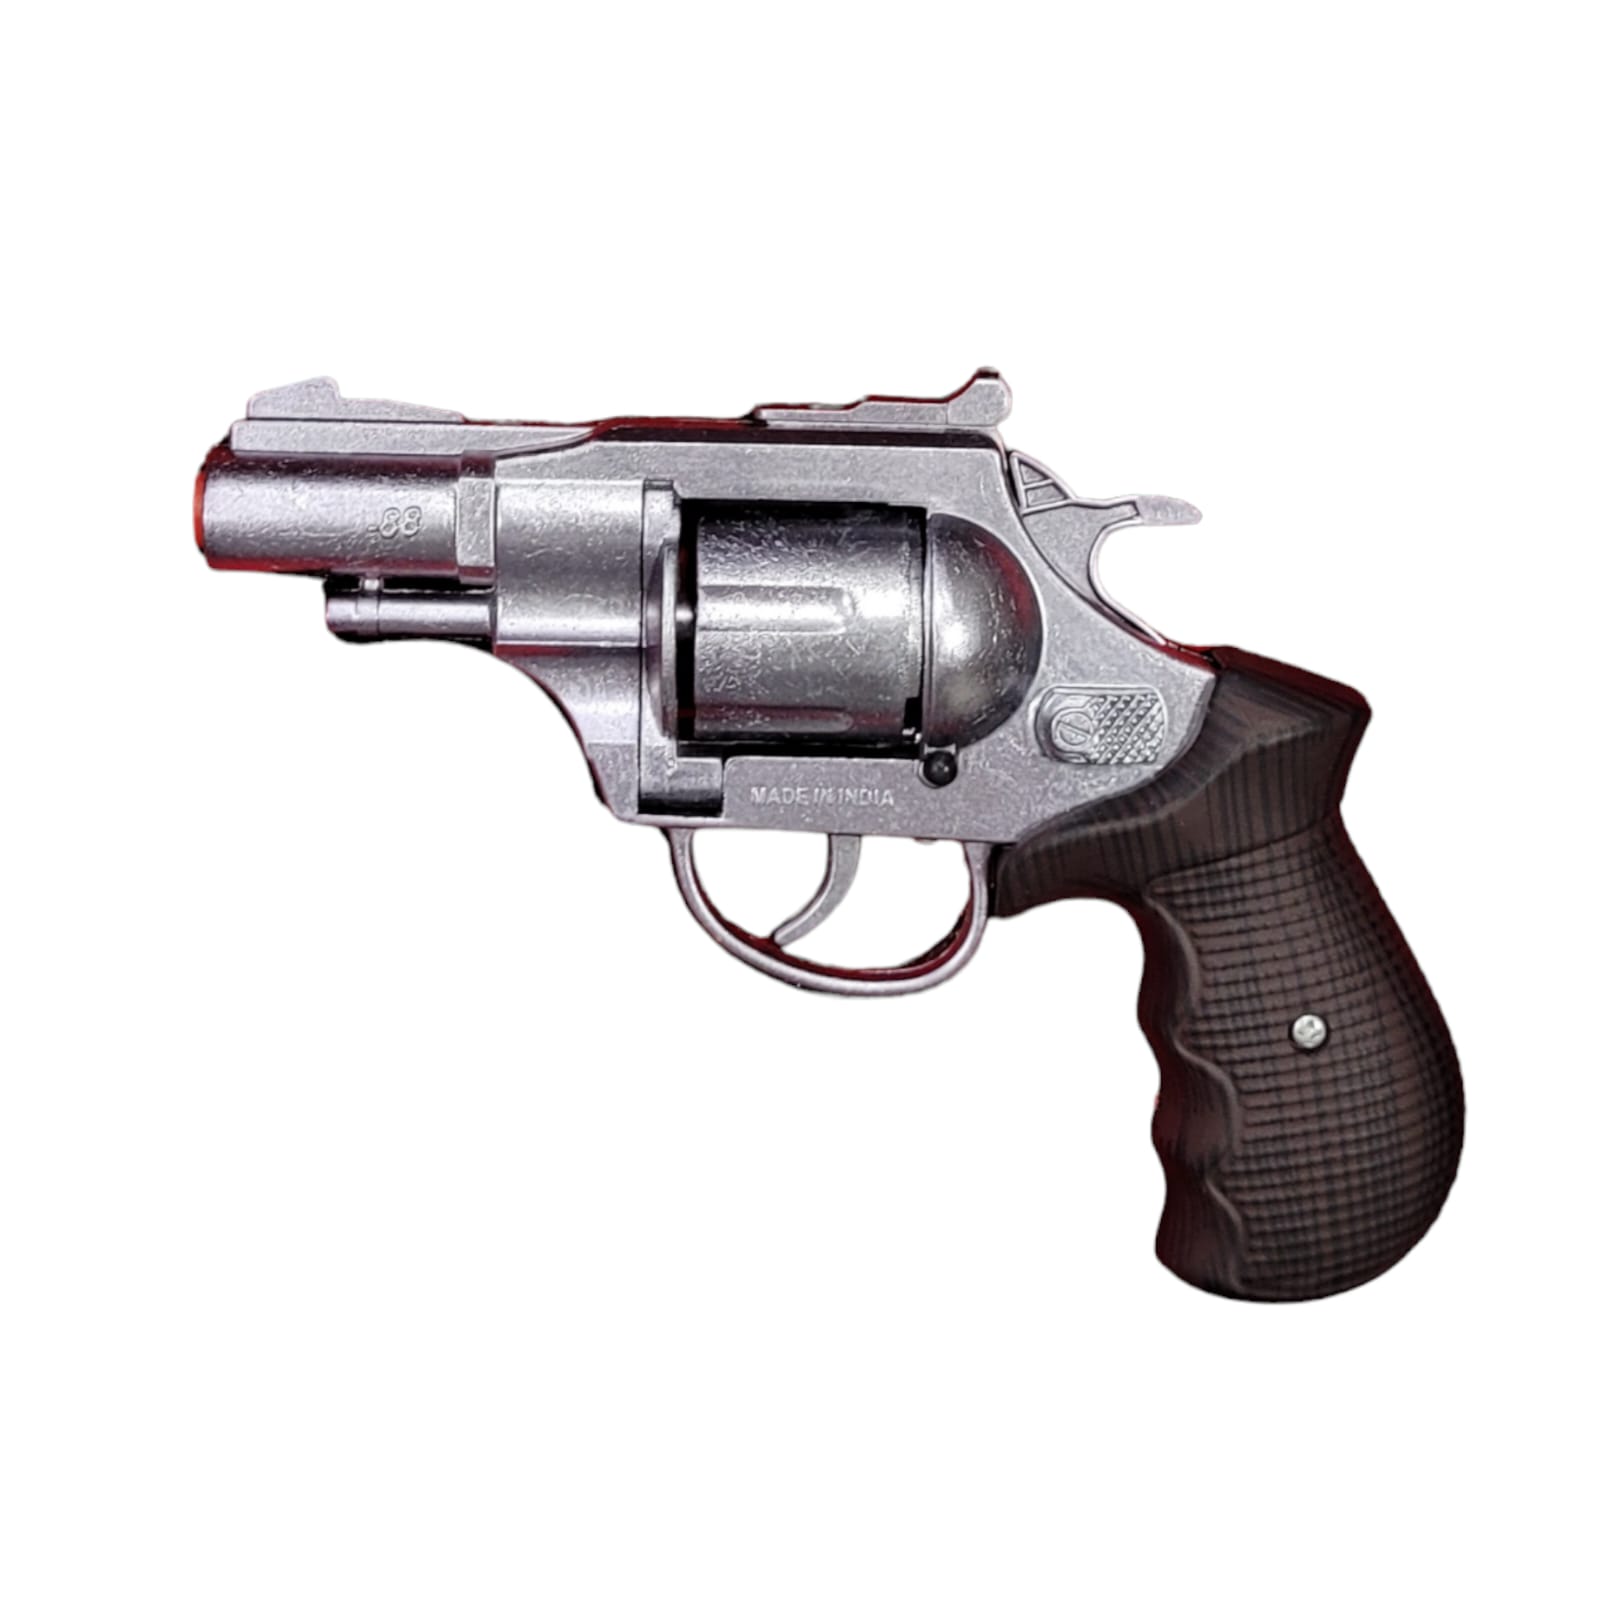 12 SHOT RING CAPS – Wild West Toys